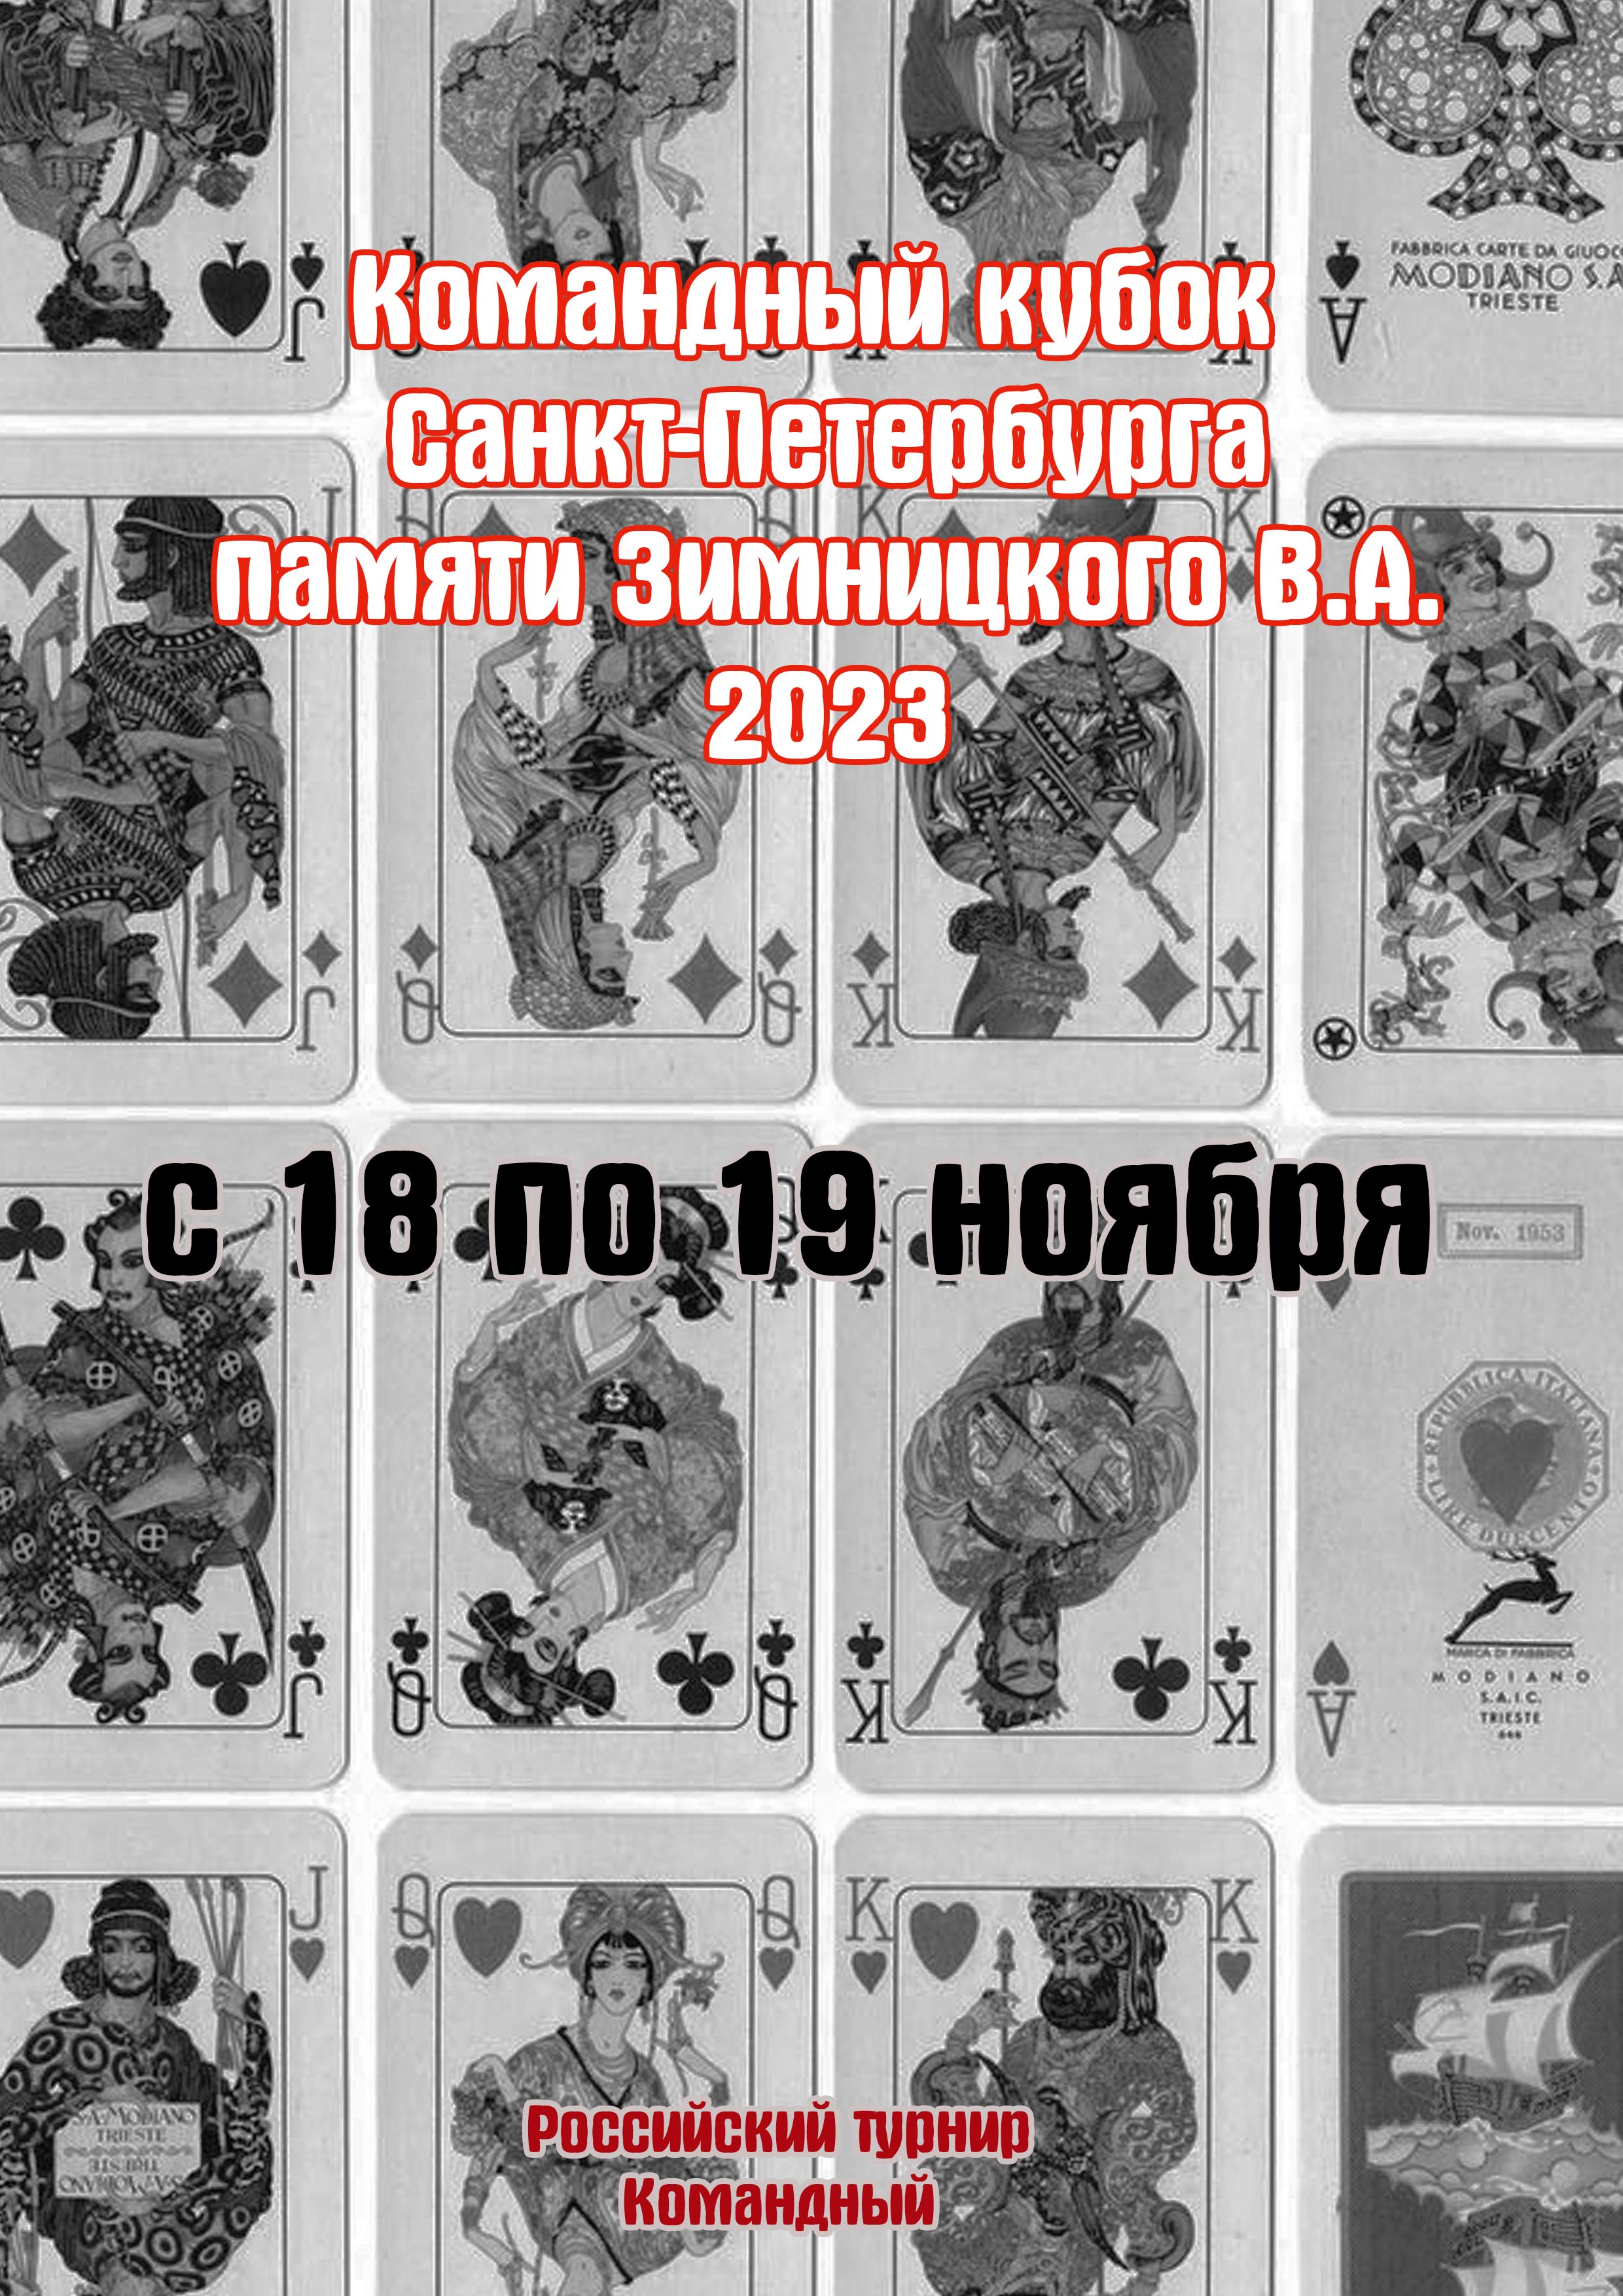 Командный кубок Санкт-Петербурга памяти Зимницкого В.А. 2023 18  בנובמבר
 2023  שנה
 